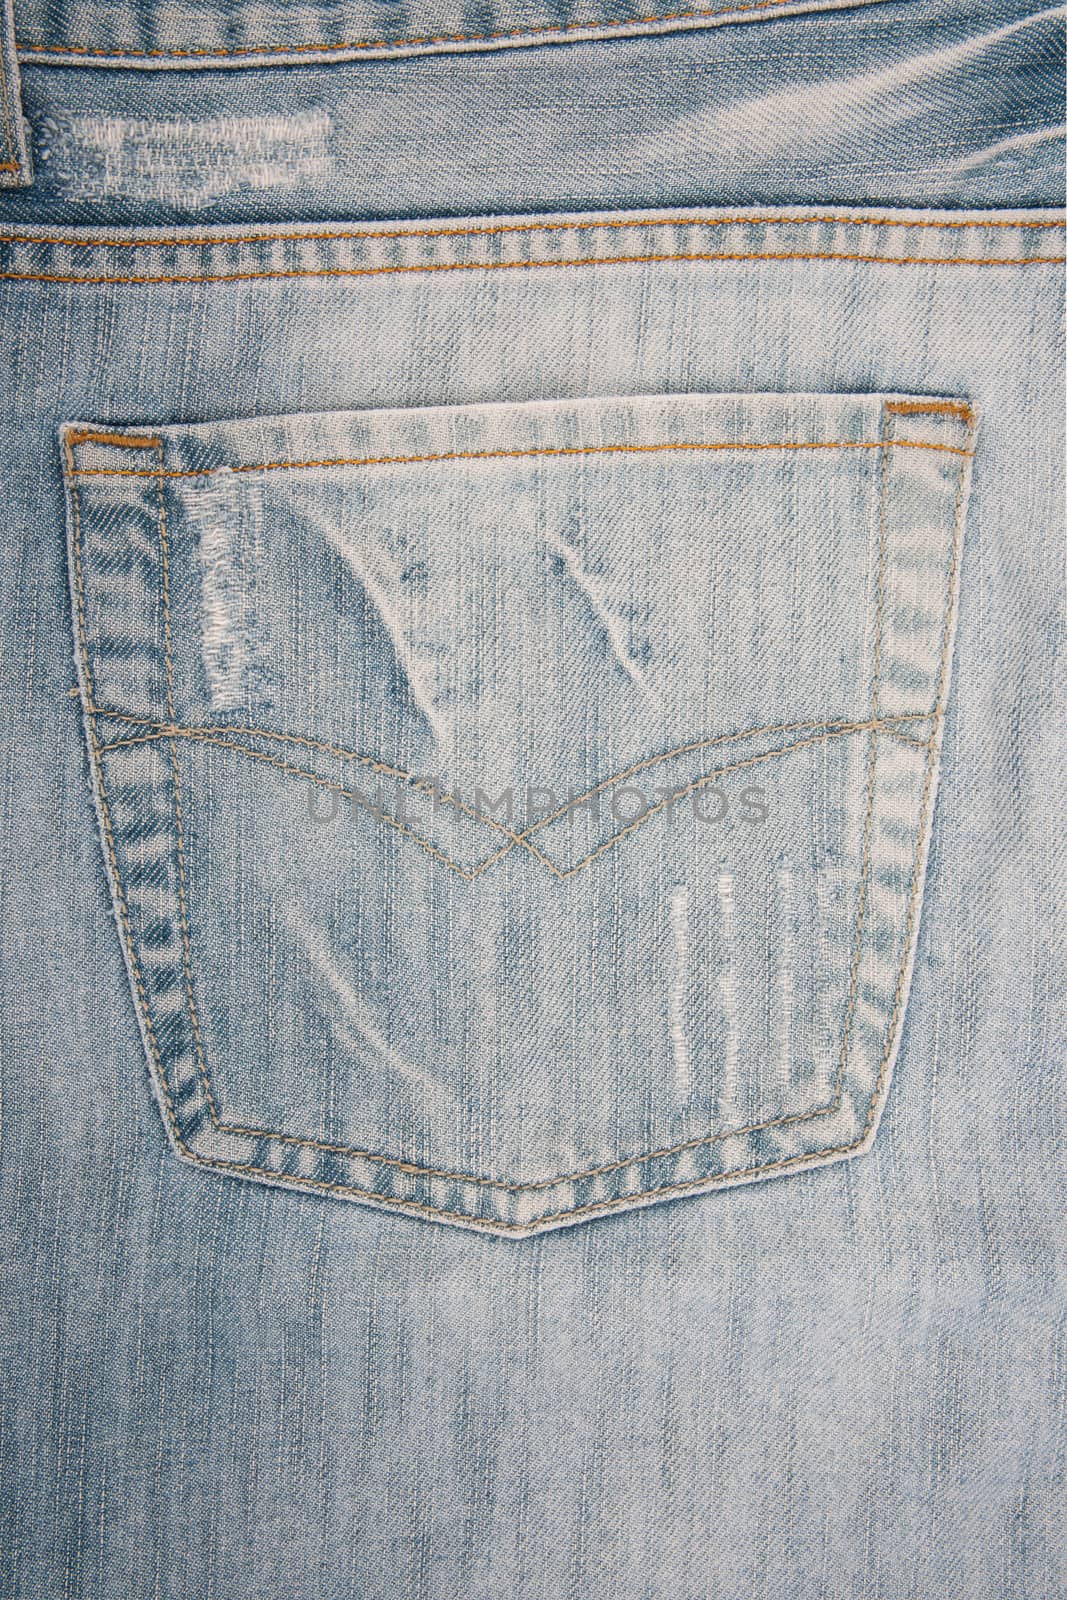 Empty back pocket of jeans by DGolbay